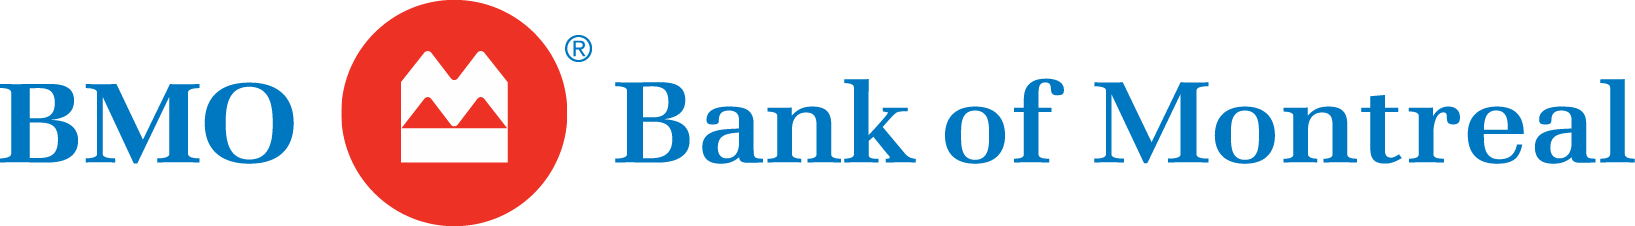 BMO Logo   Bank of Montreal png